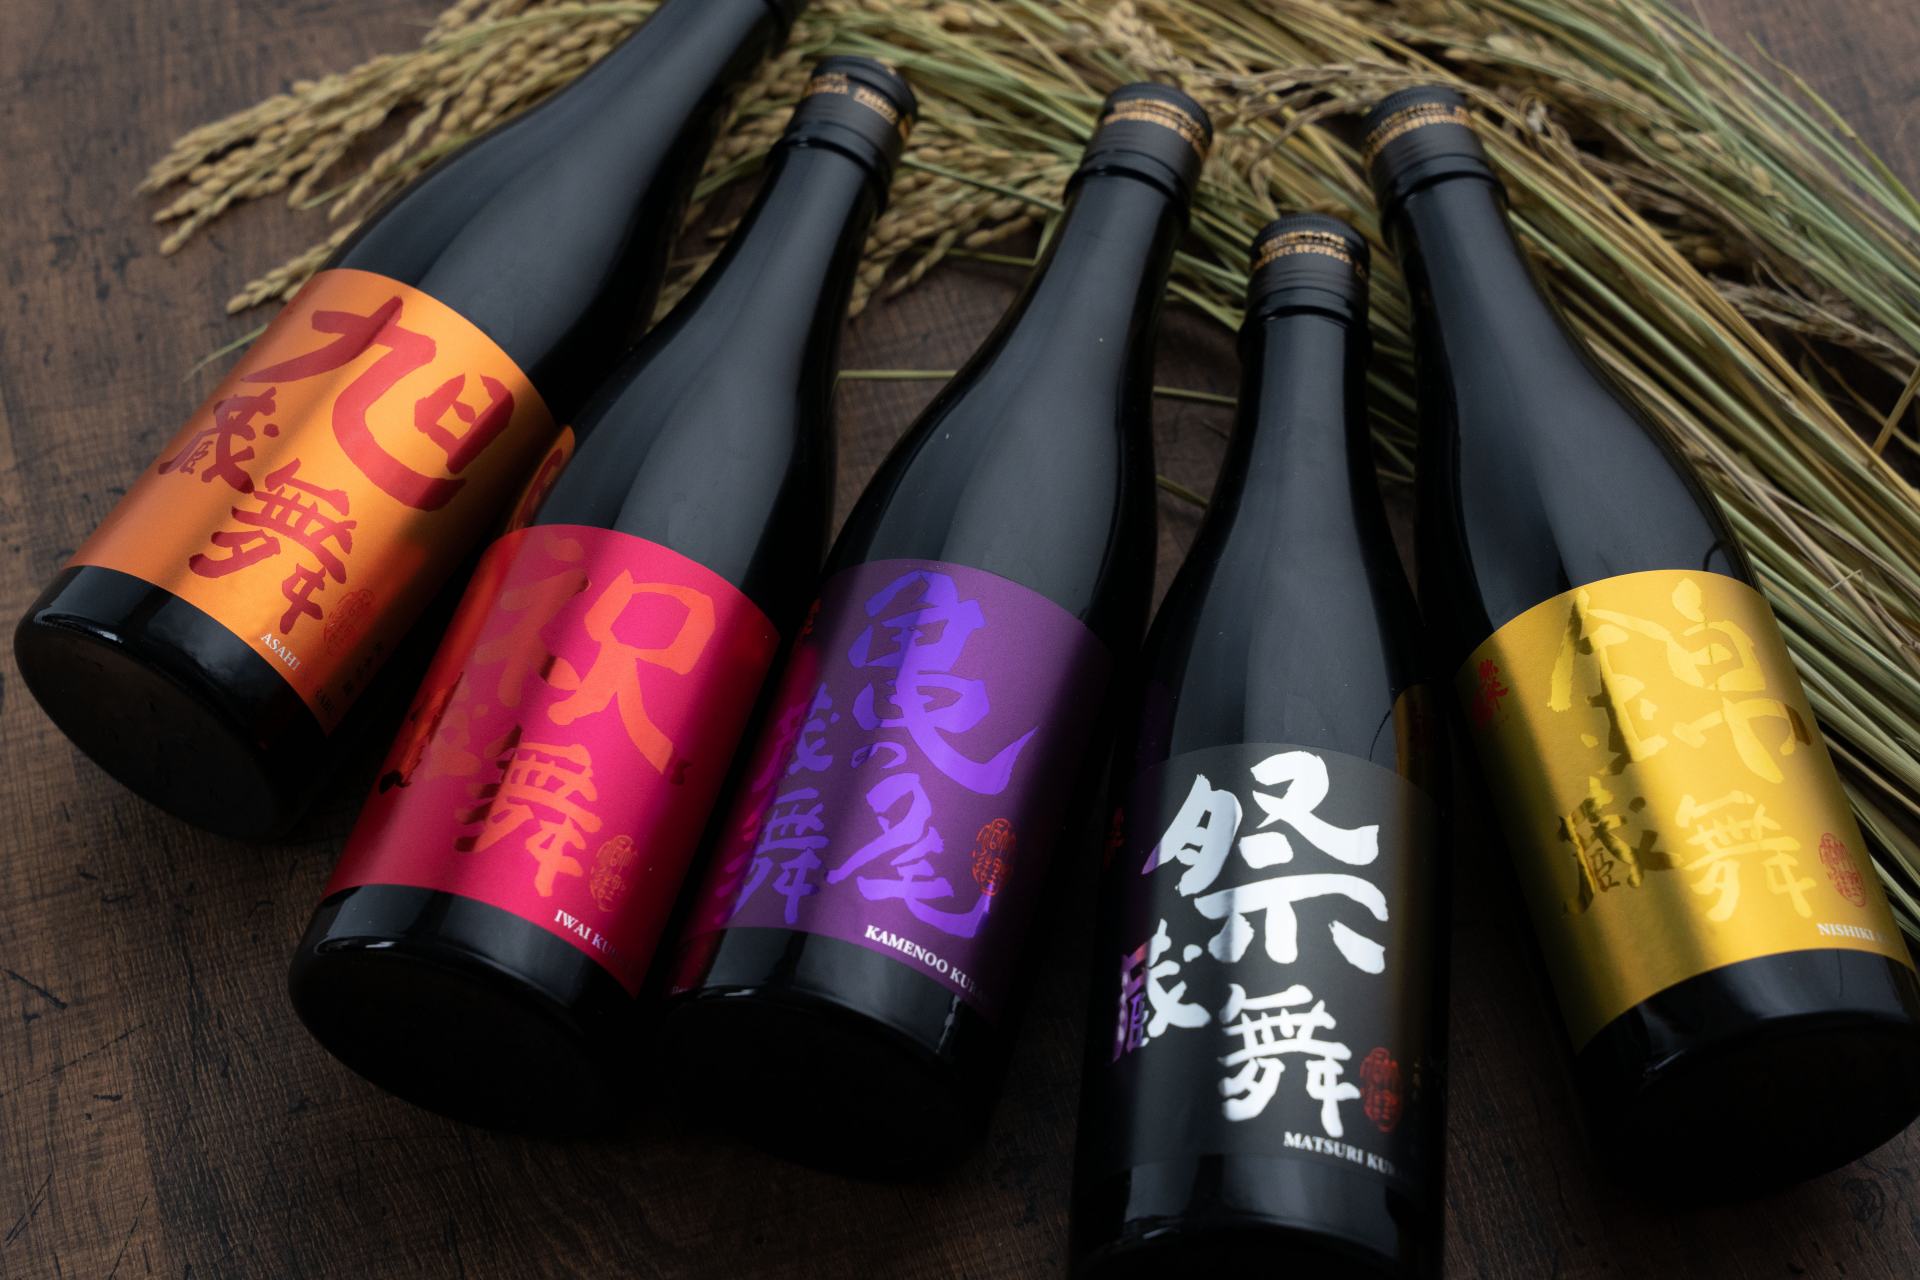 The pure rice sake "Kurabu" series, named after the sake rice varieties.